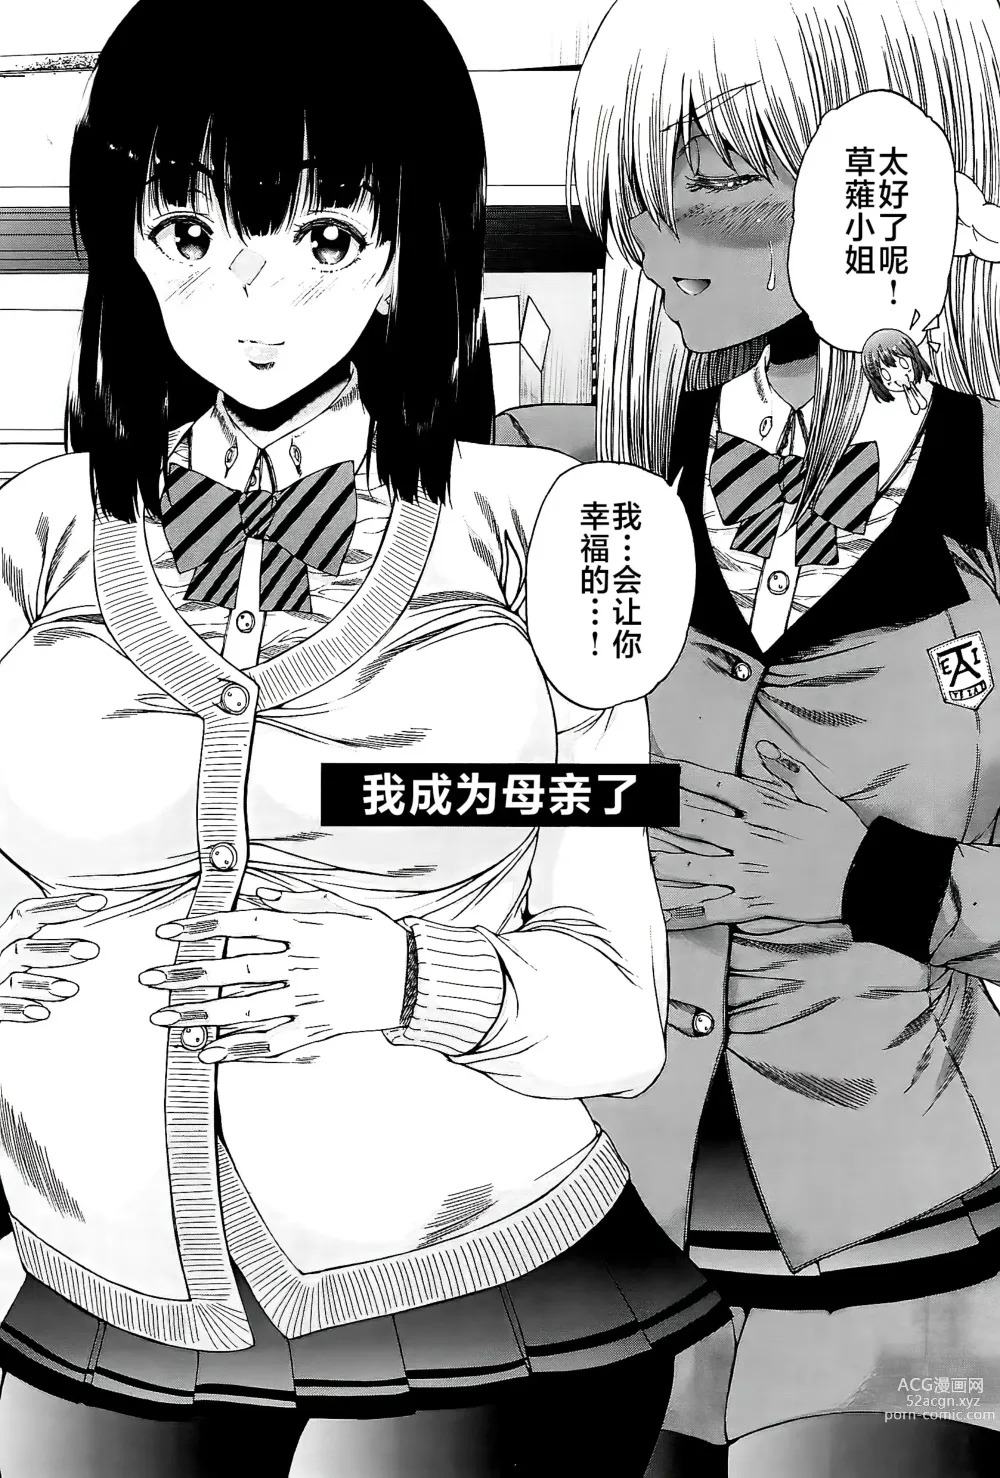 Page 206 of manga Futanari Musume to Gakuen Harem